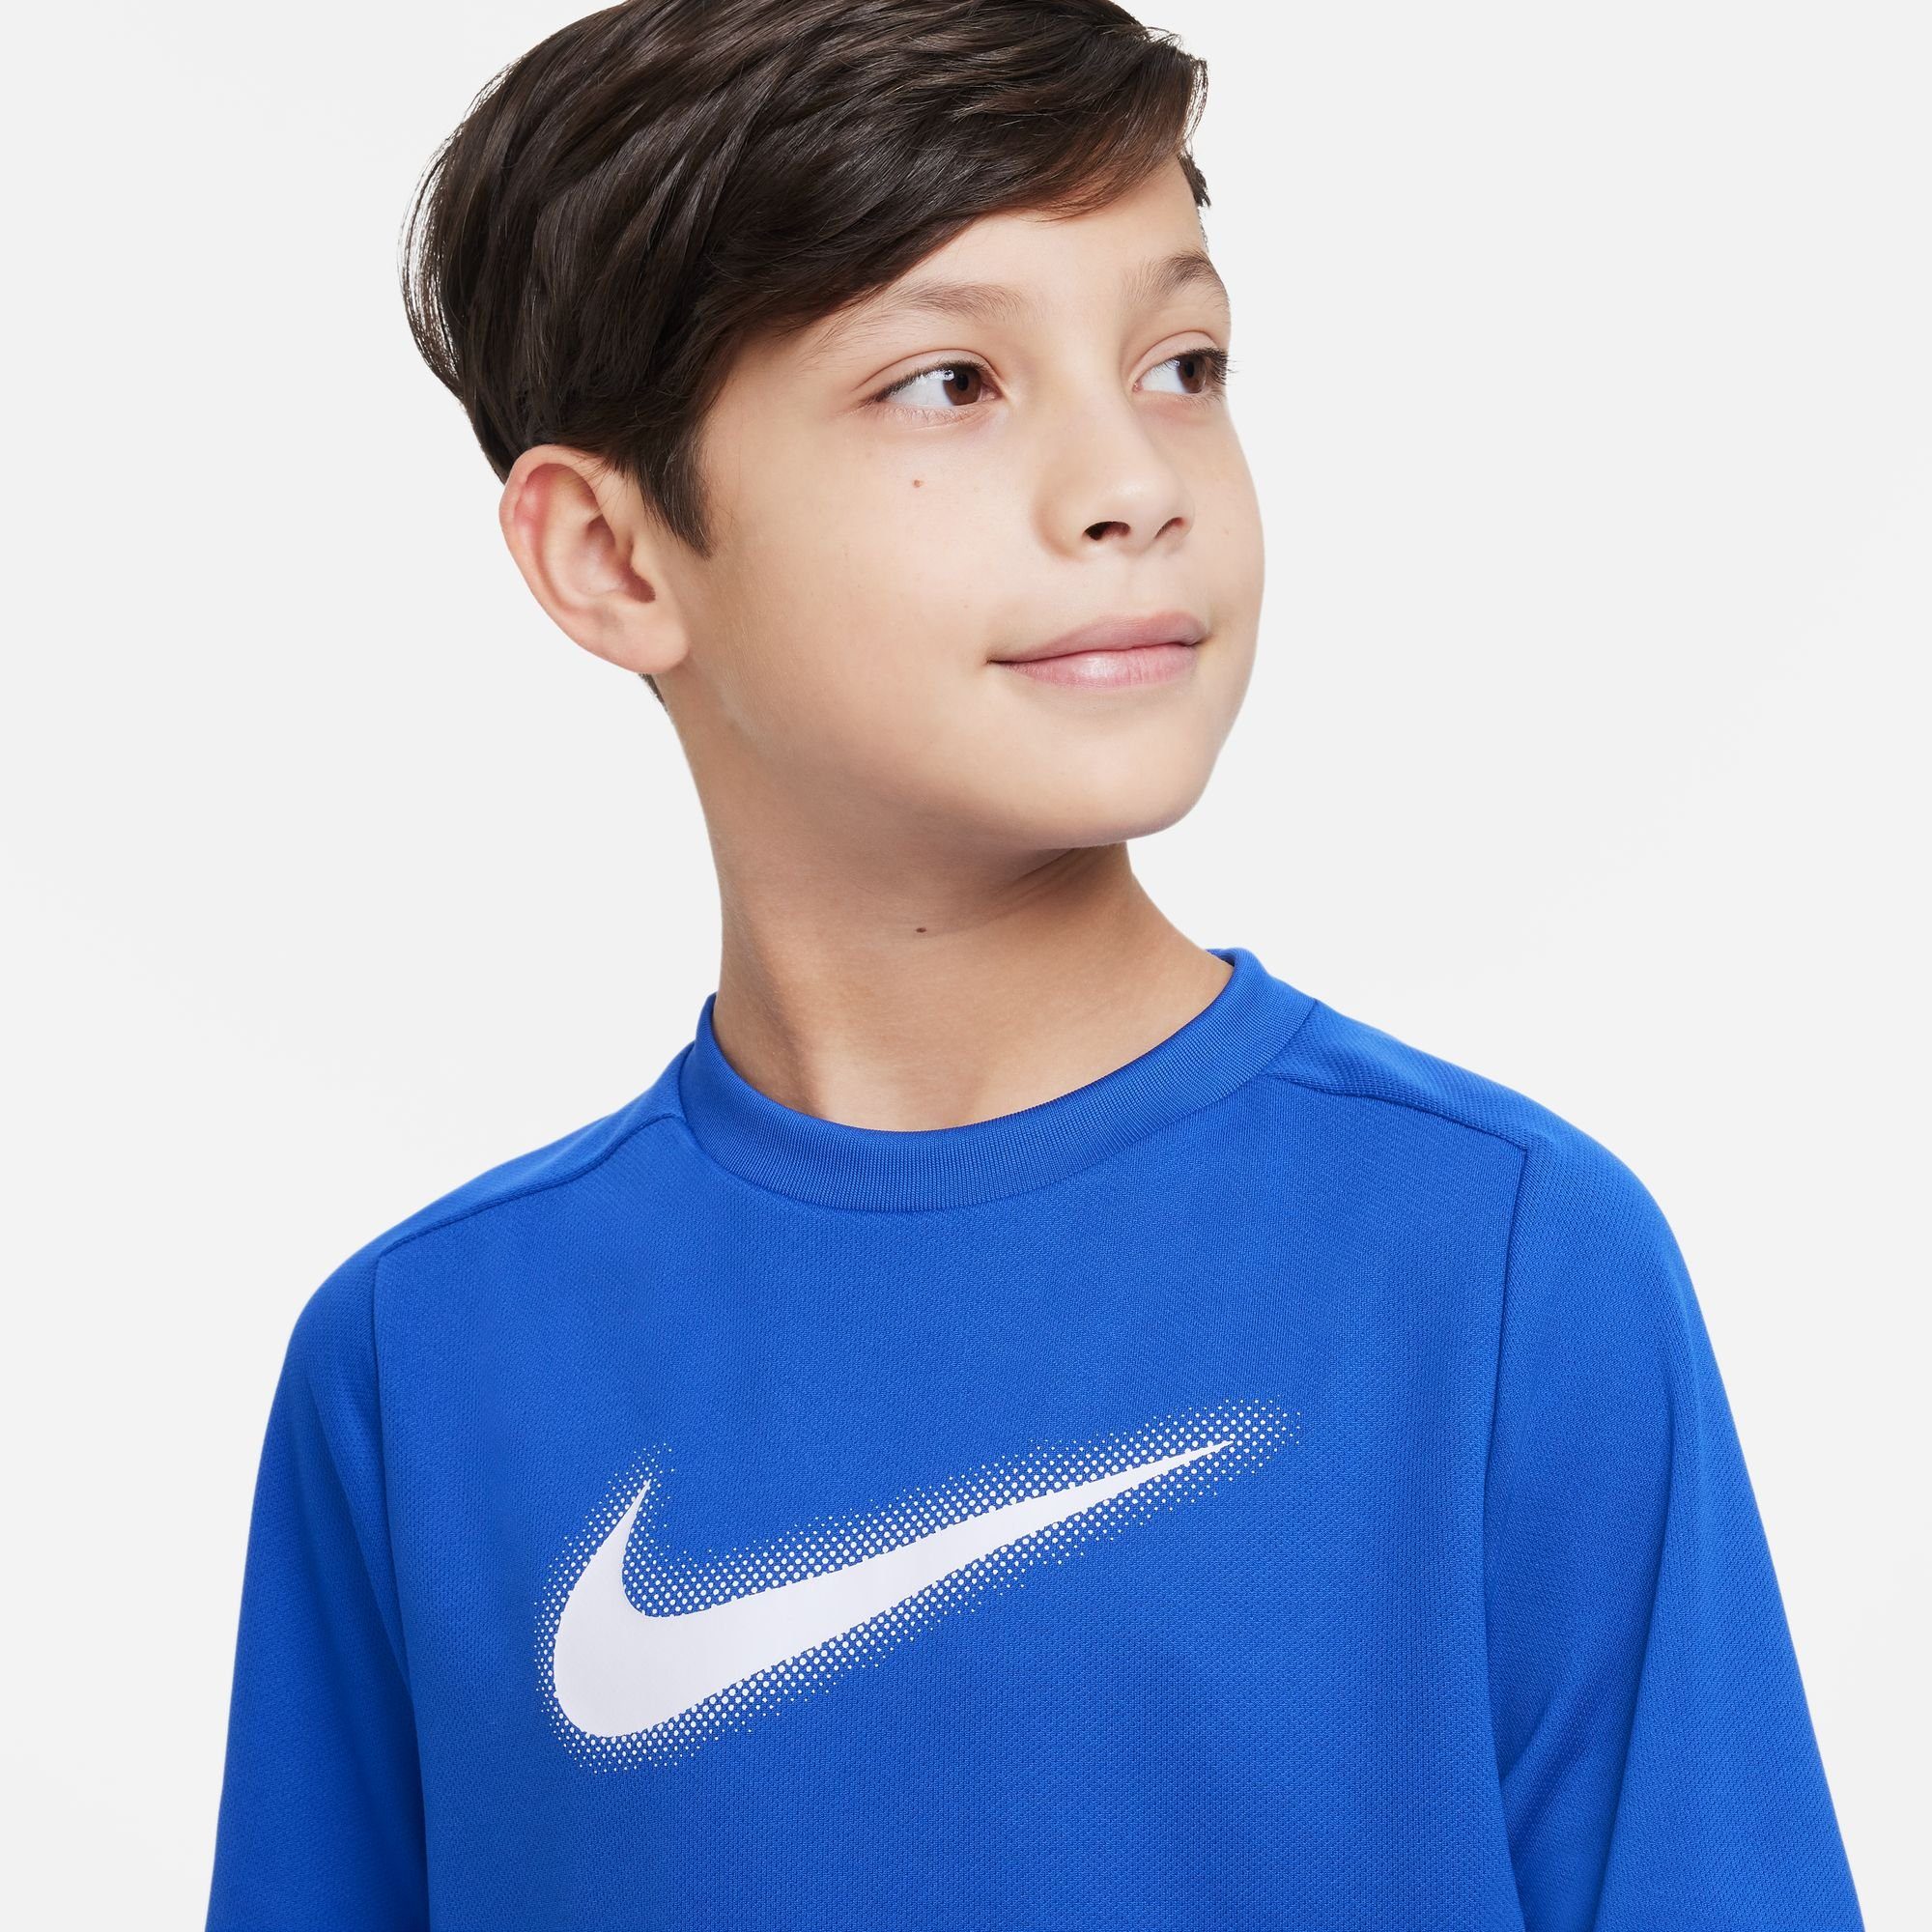 TOP TRAINING GRAPHIC (BOYS) KIDS' BIG MULTI+ Trainingsshirt GAME Nike DRI-FIT ROYAL/WHITE